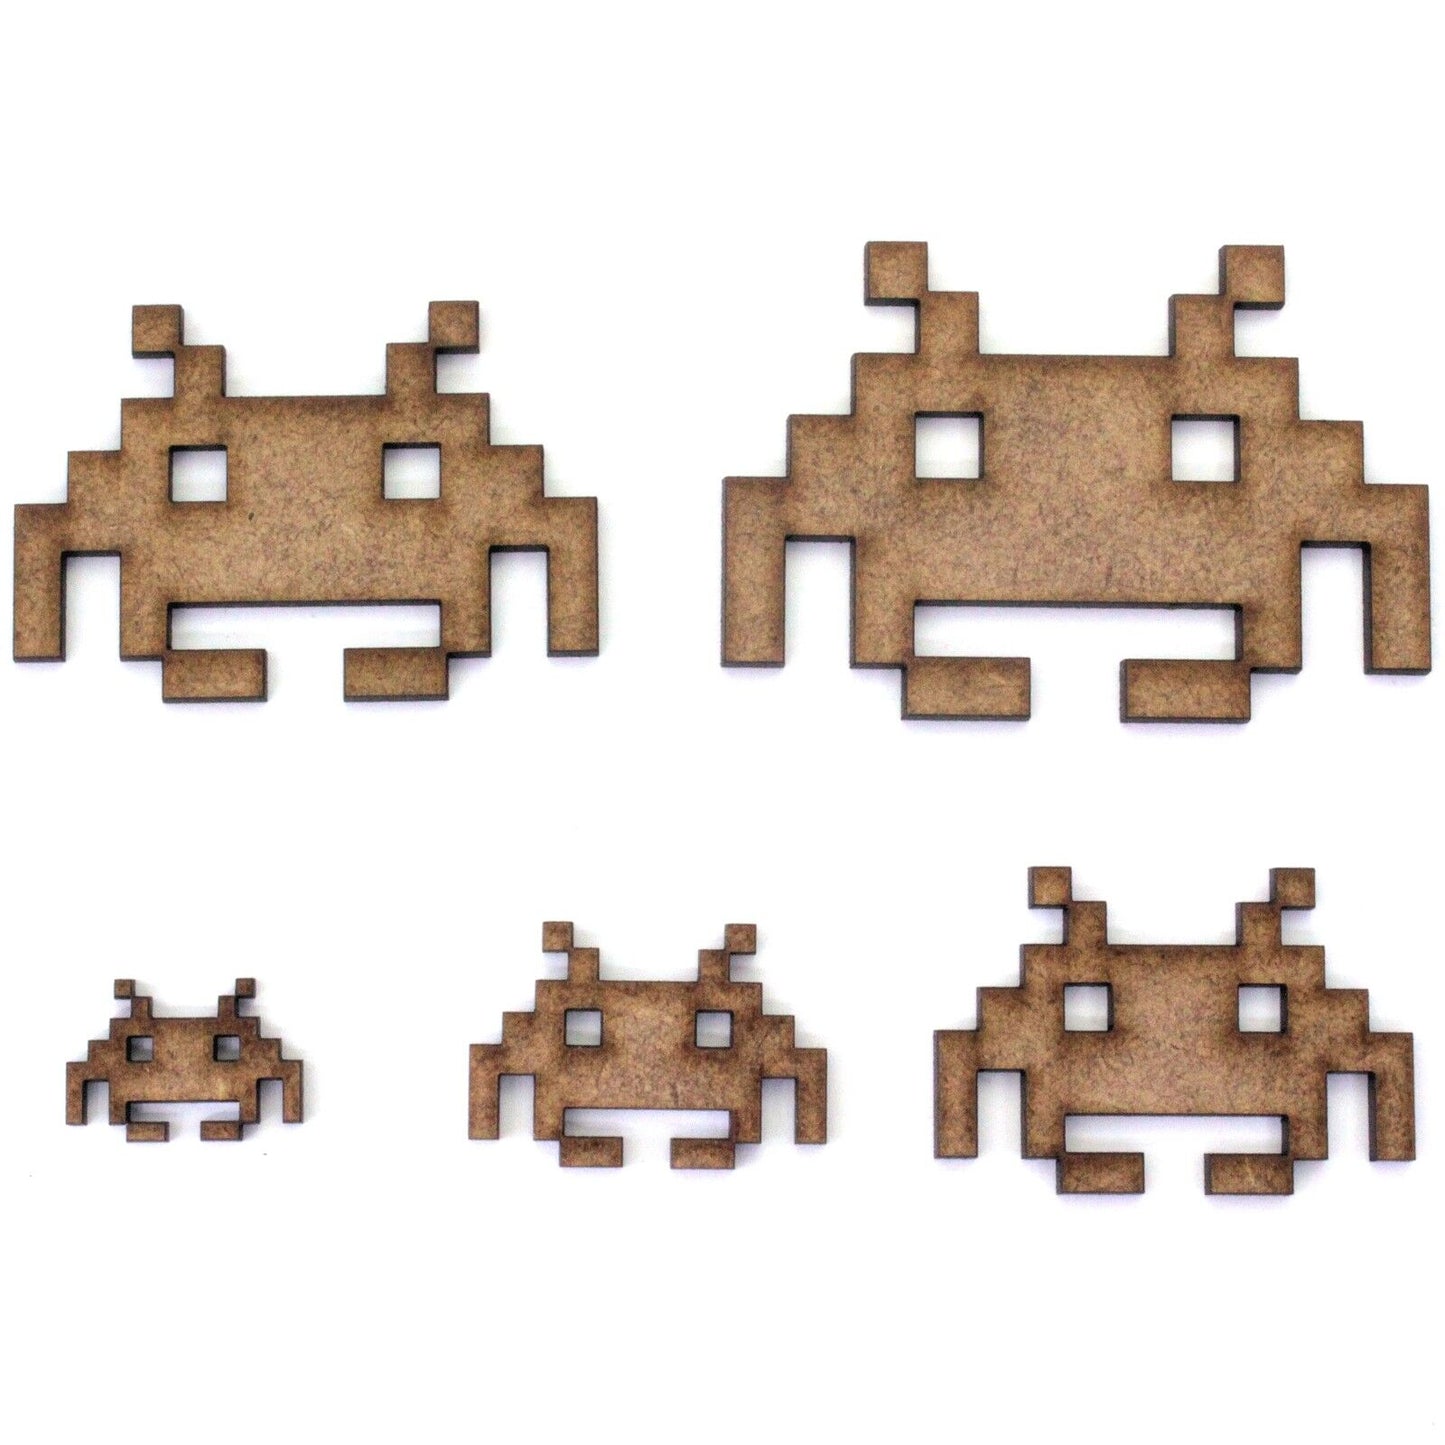 Space Invaders Alien Craft Shapes, 2mm MDF Wood. Vintage Atari Video Game